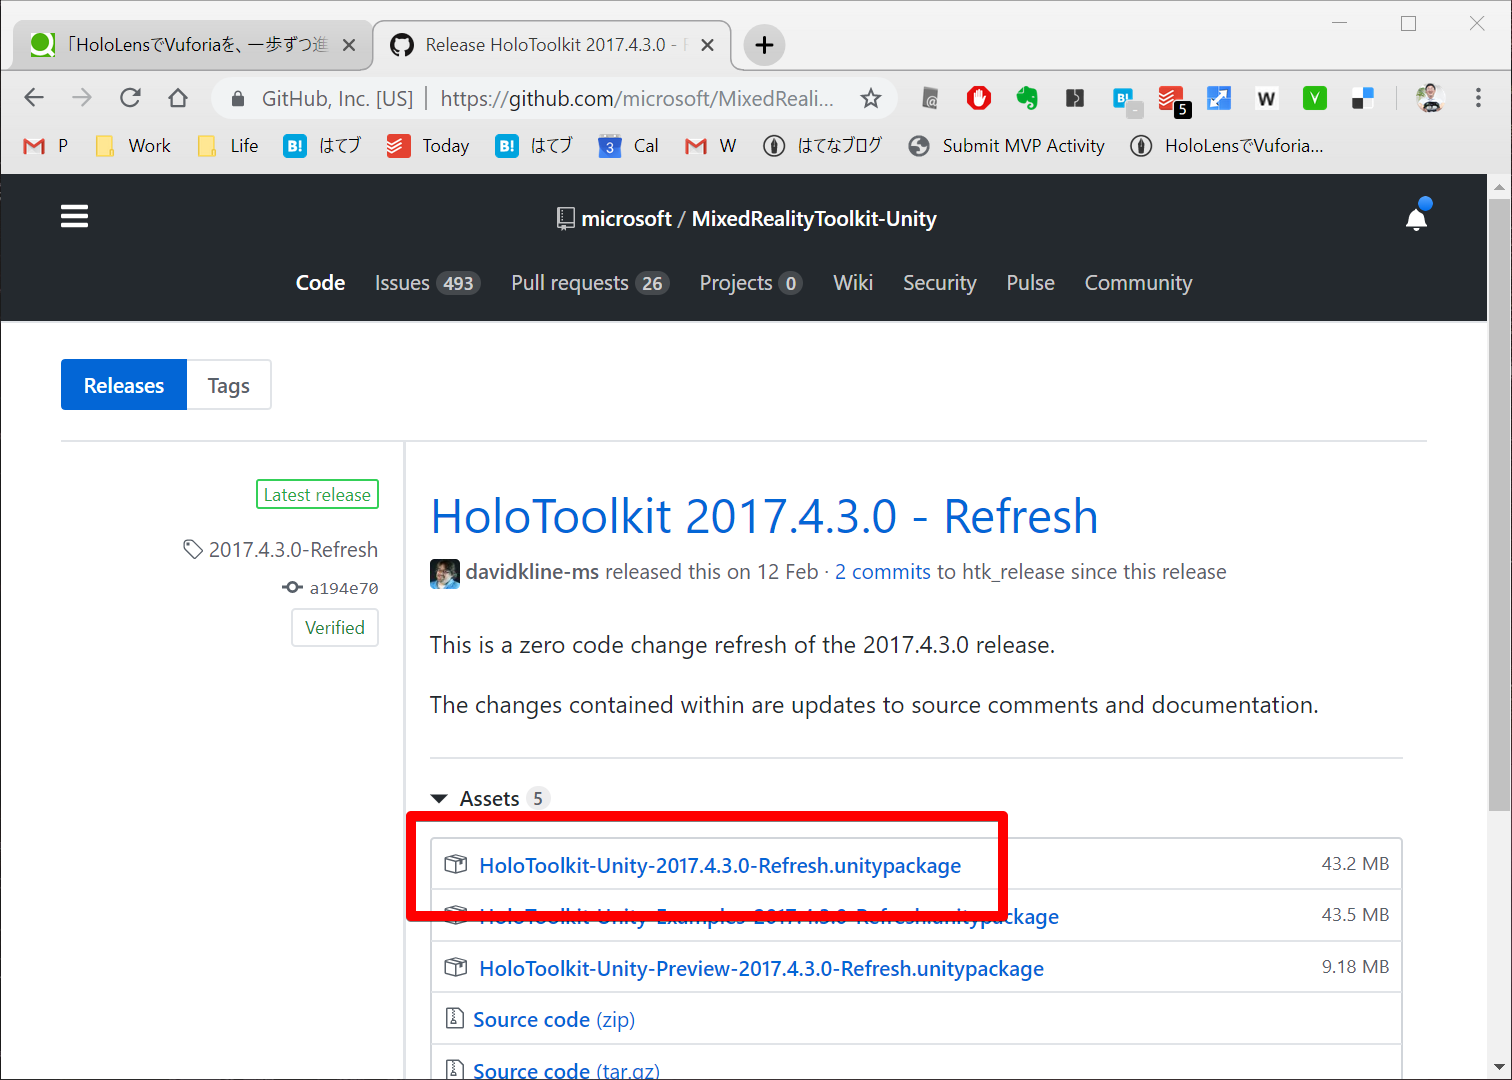 Release HoloToolkit 2017.4.3.0 - Refresh · microsoft_MixedRealityToolkit-Unity - Google Chrome 2019-07-05 08.08.56.png